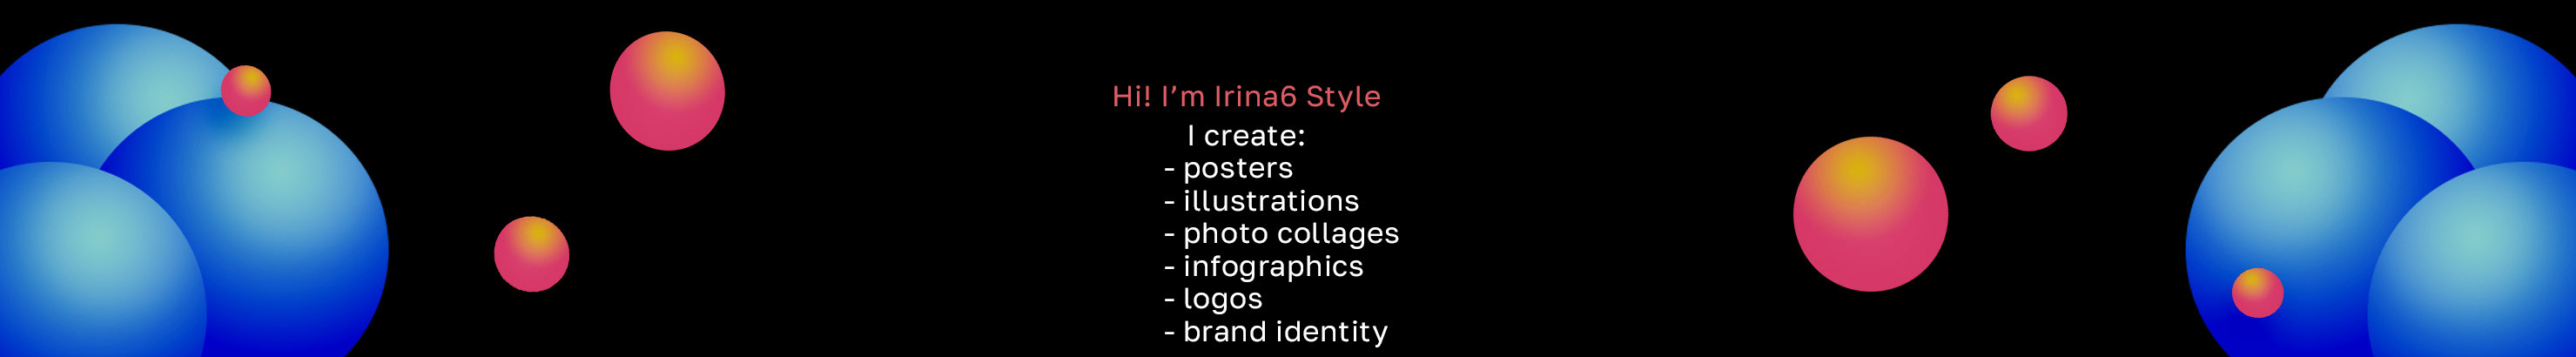 Banner de perfil de Irina6 Style